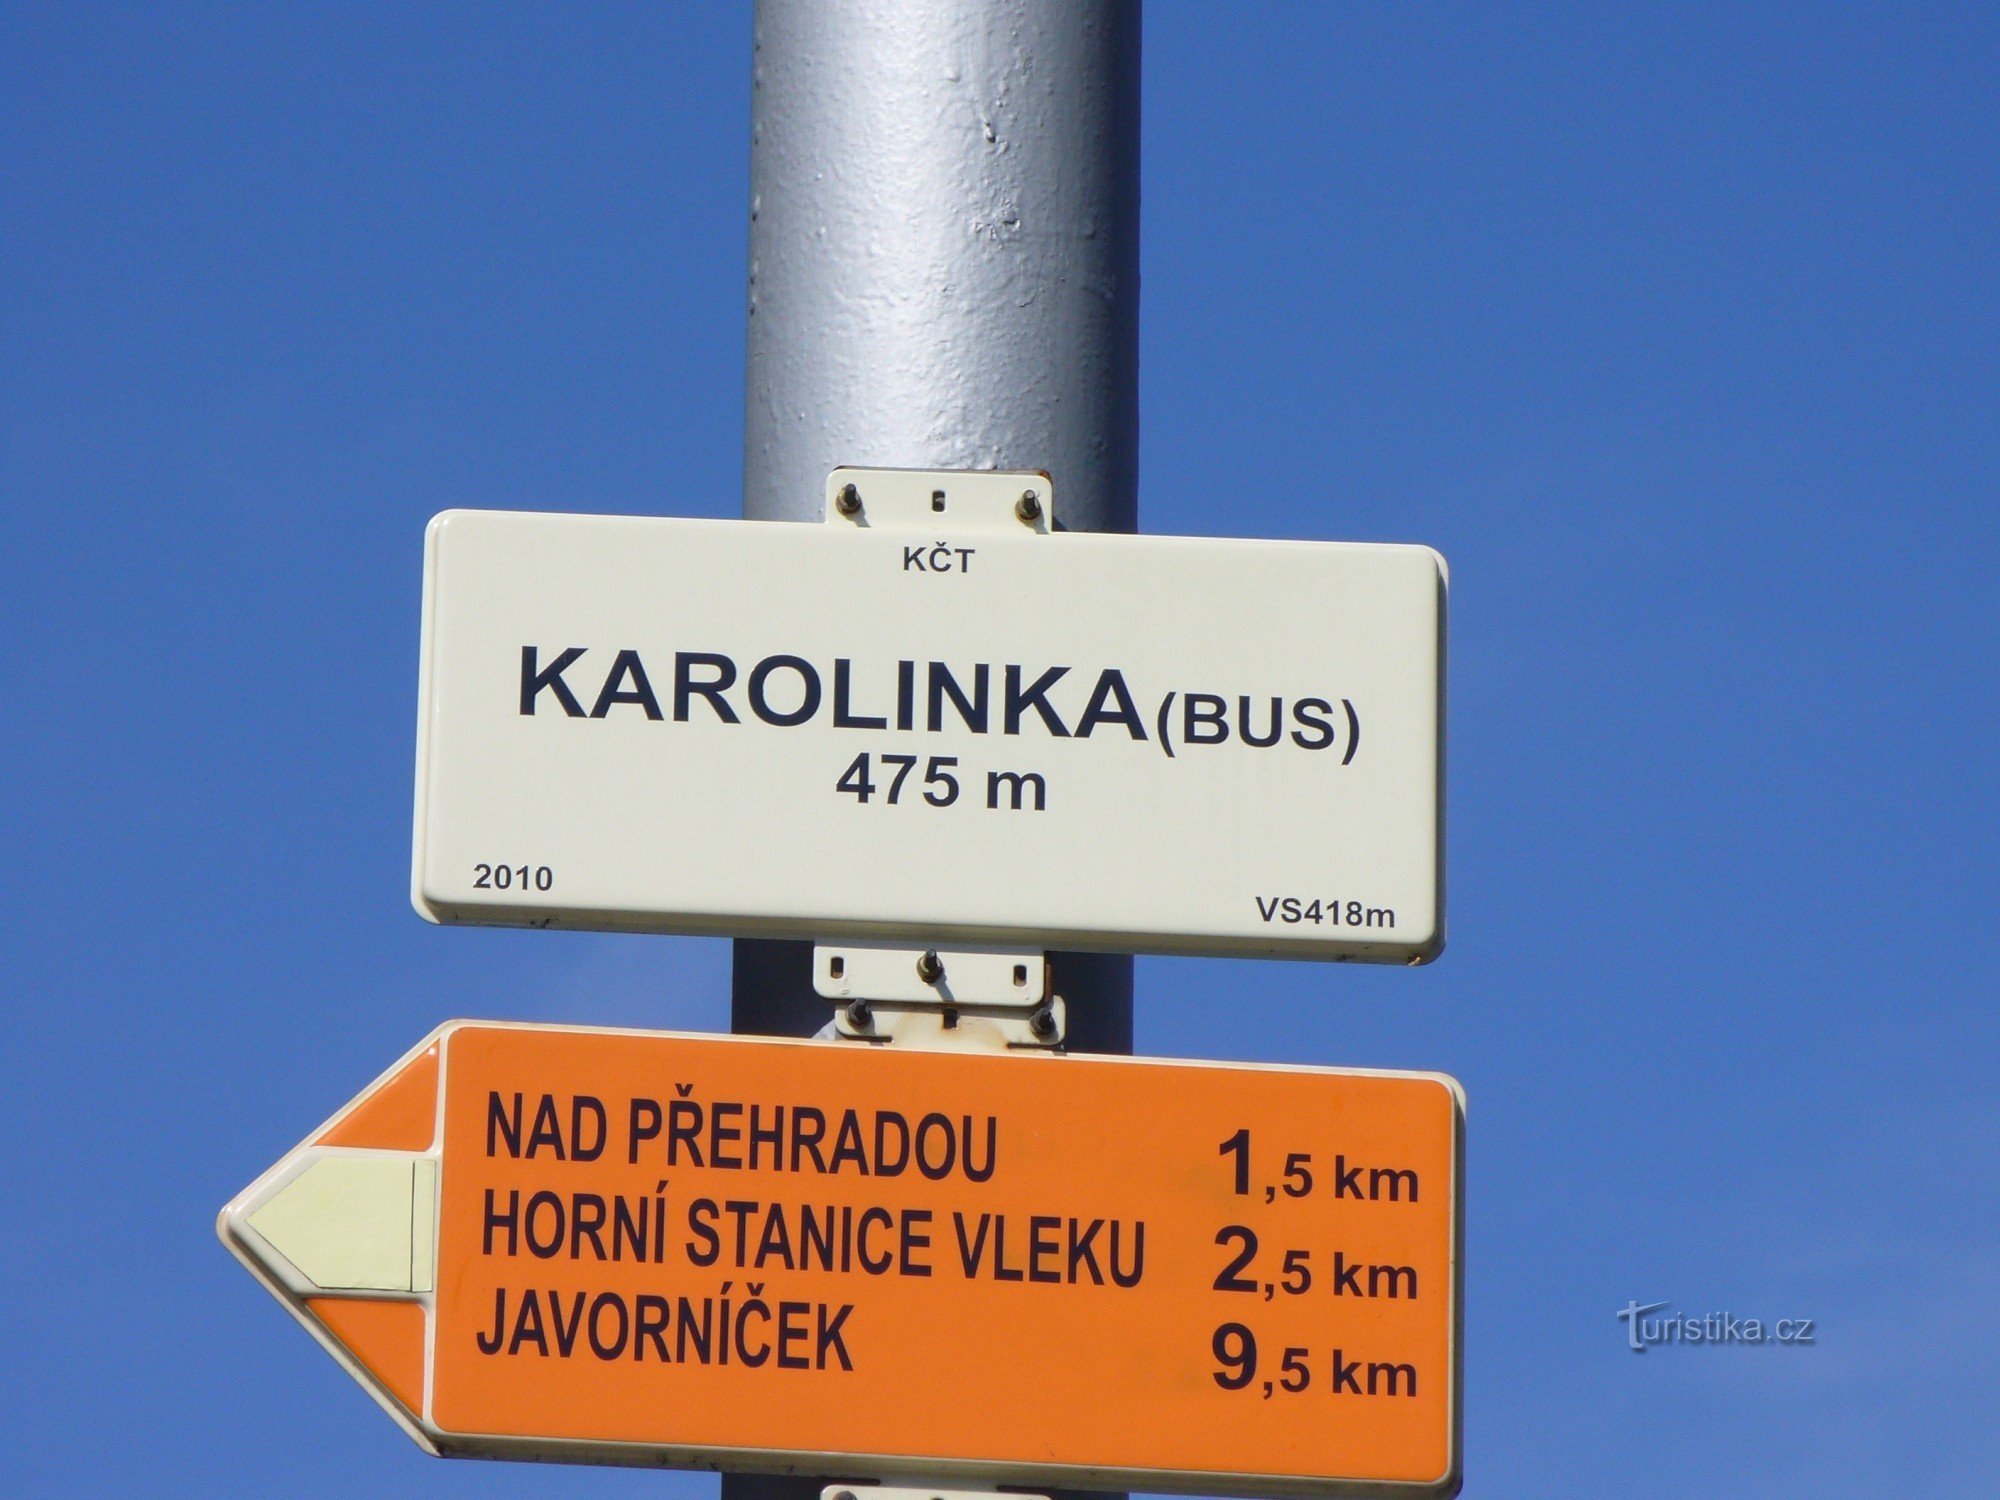 First signpost - Karolinka (BUS)